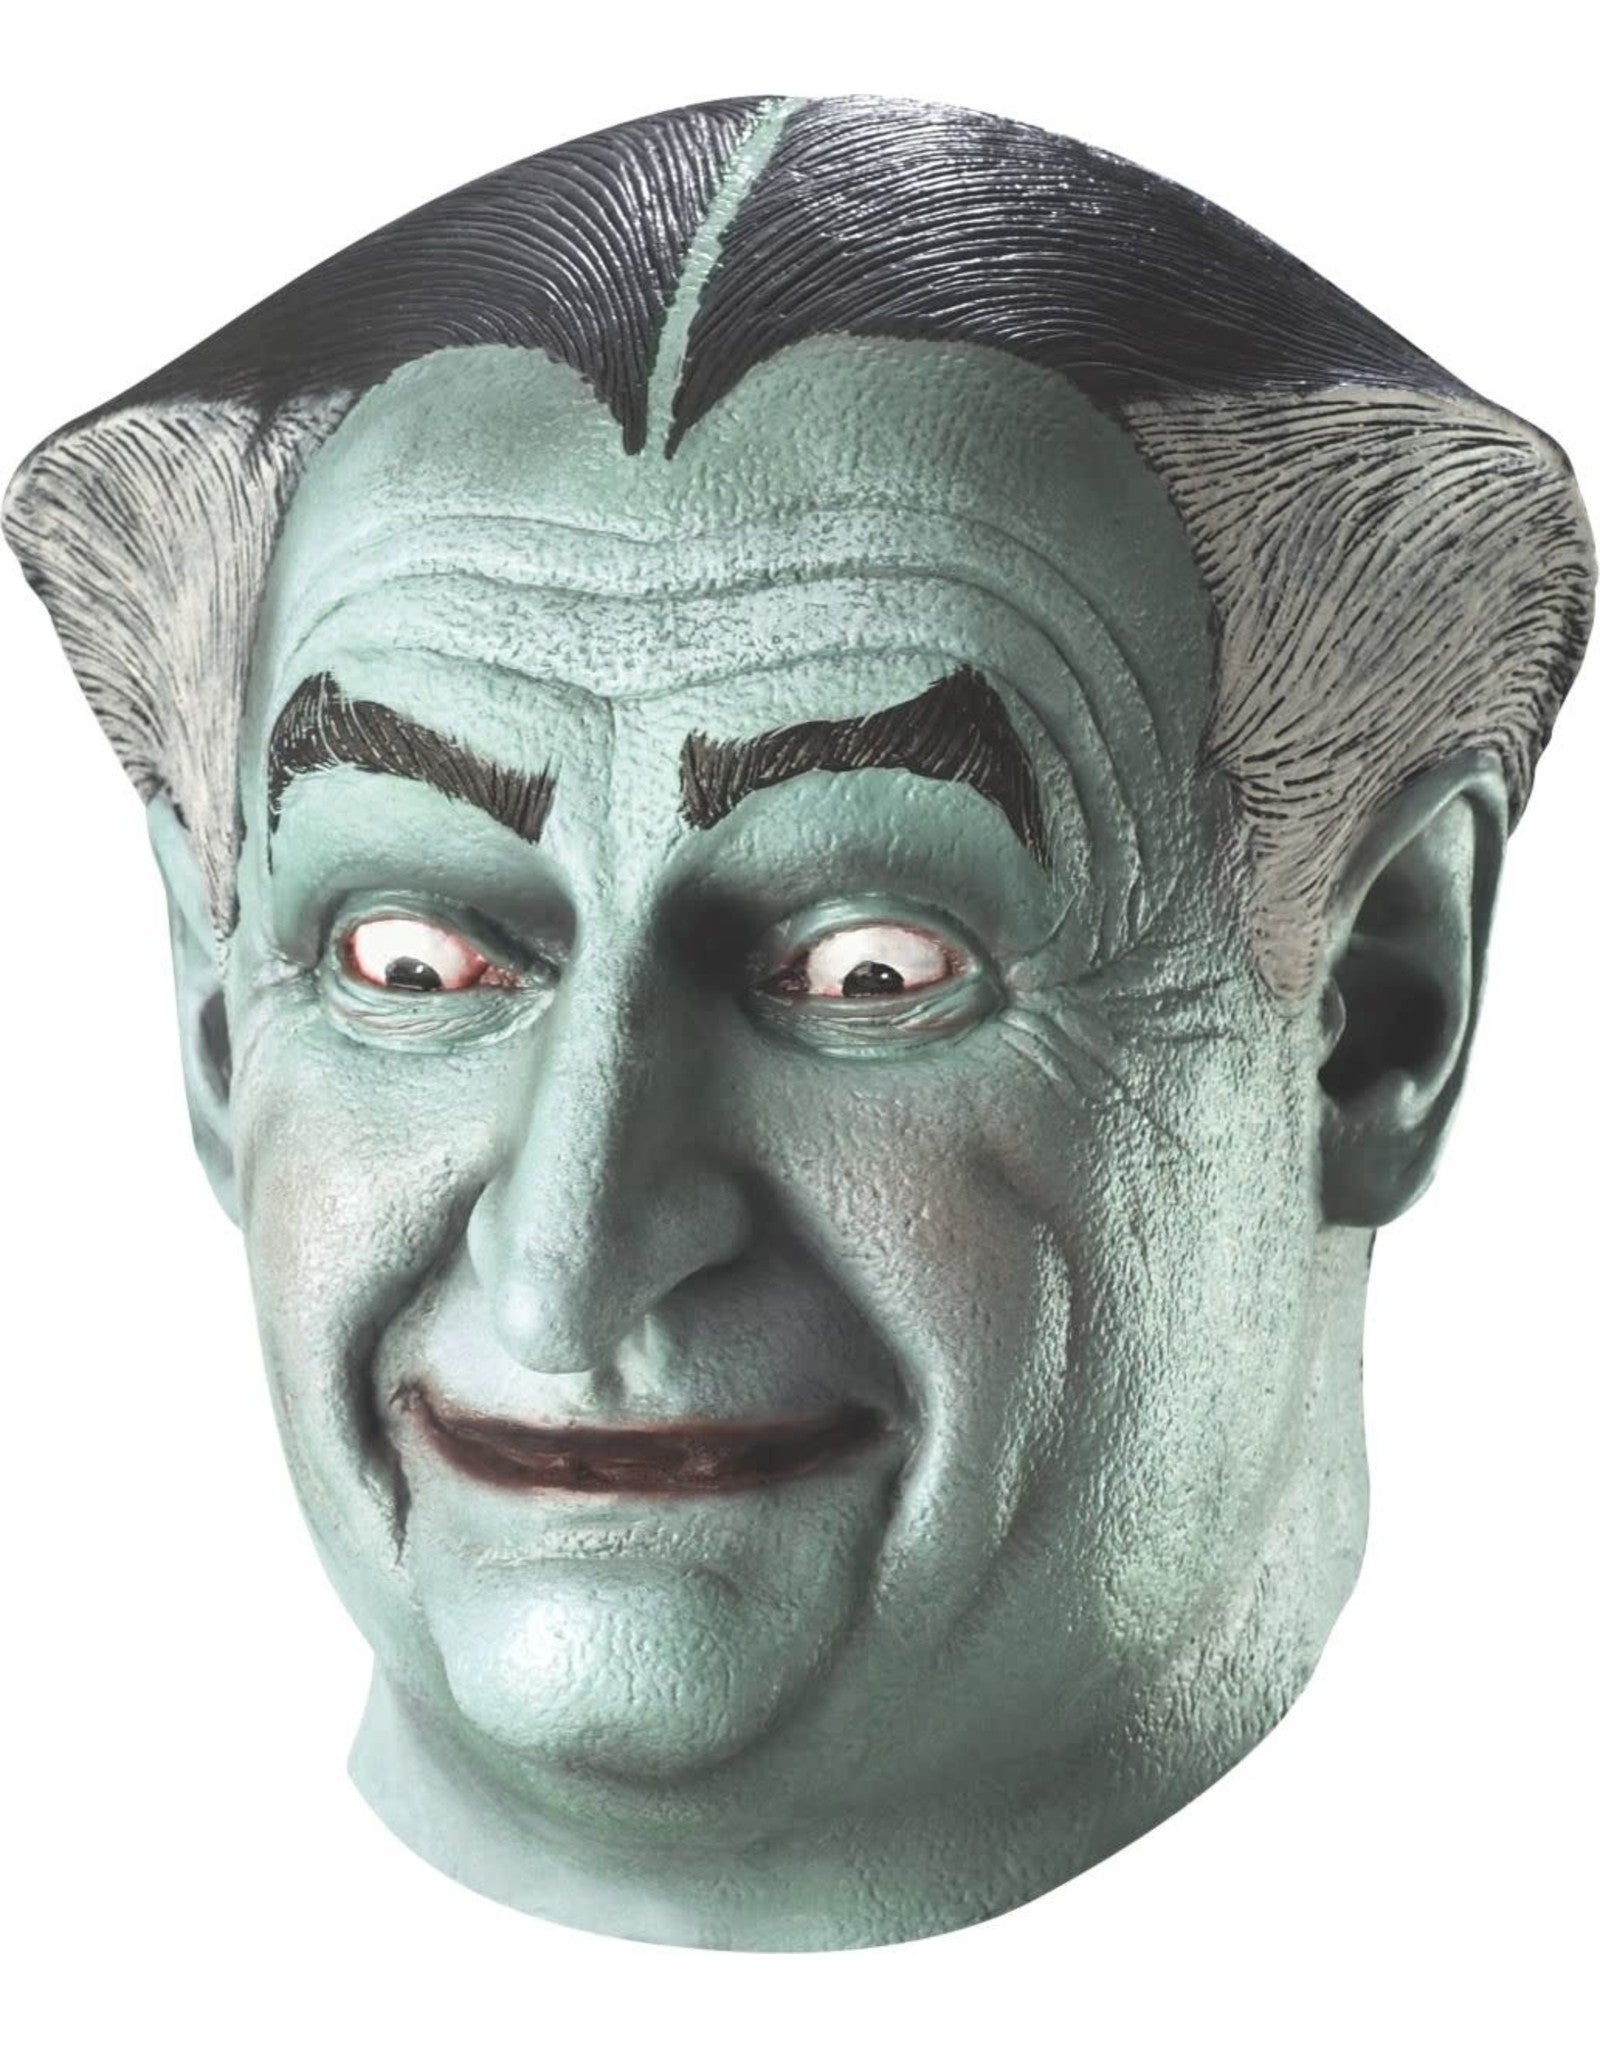 Grandpa Munster Mask - Discontinued